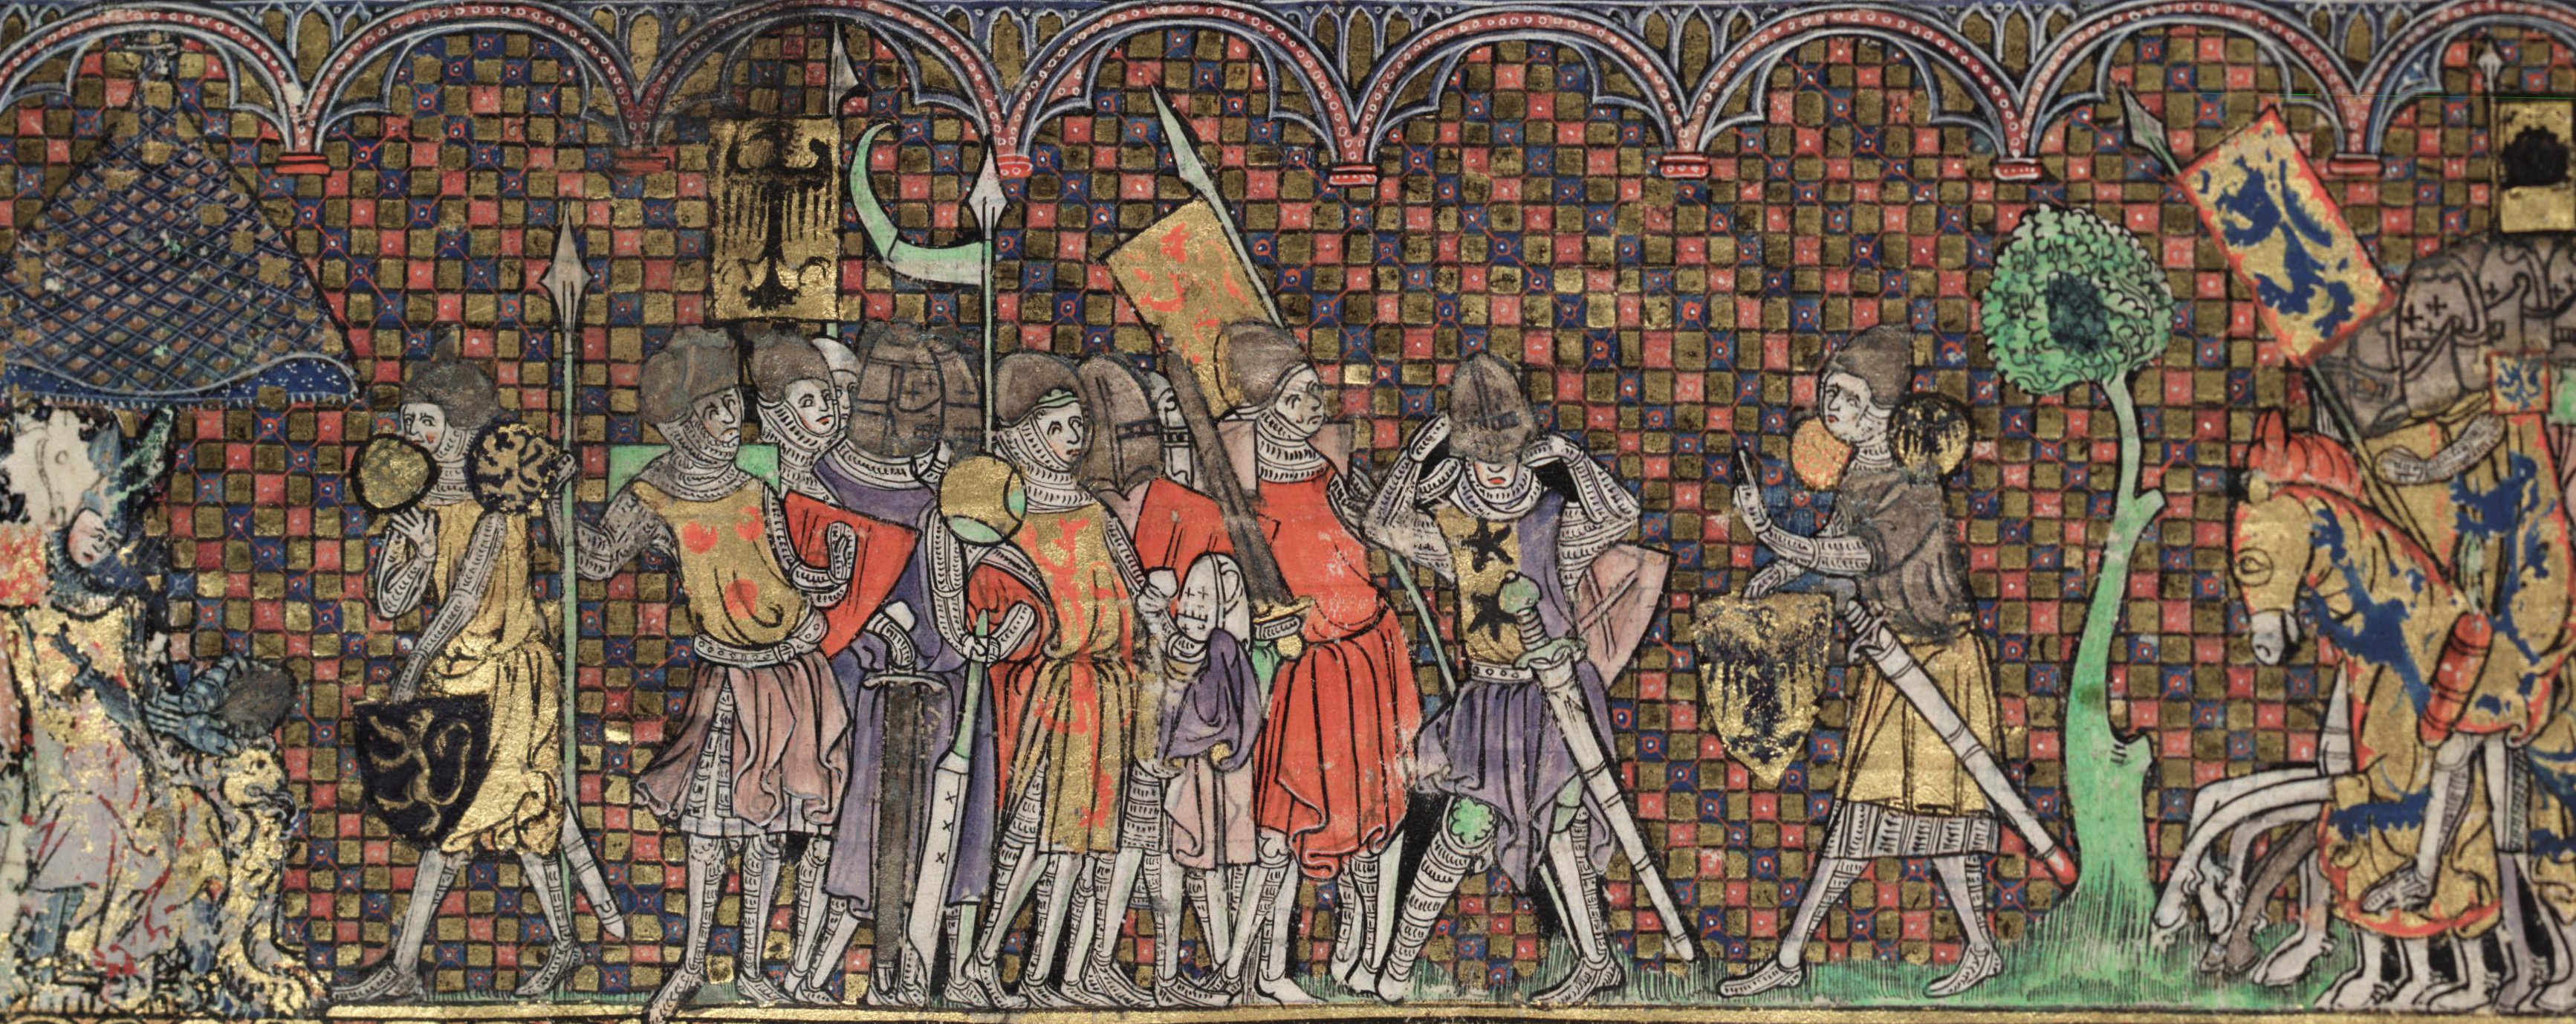 A manuscript miniature showcasing men wearing armor, reminiscent of the medieval era.